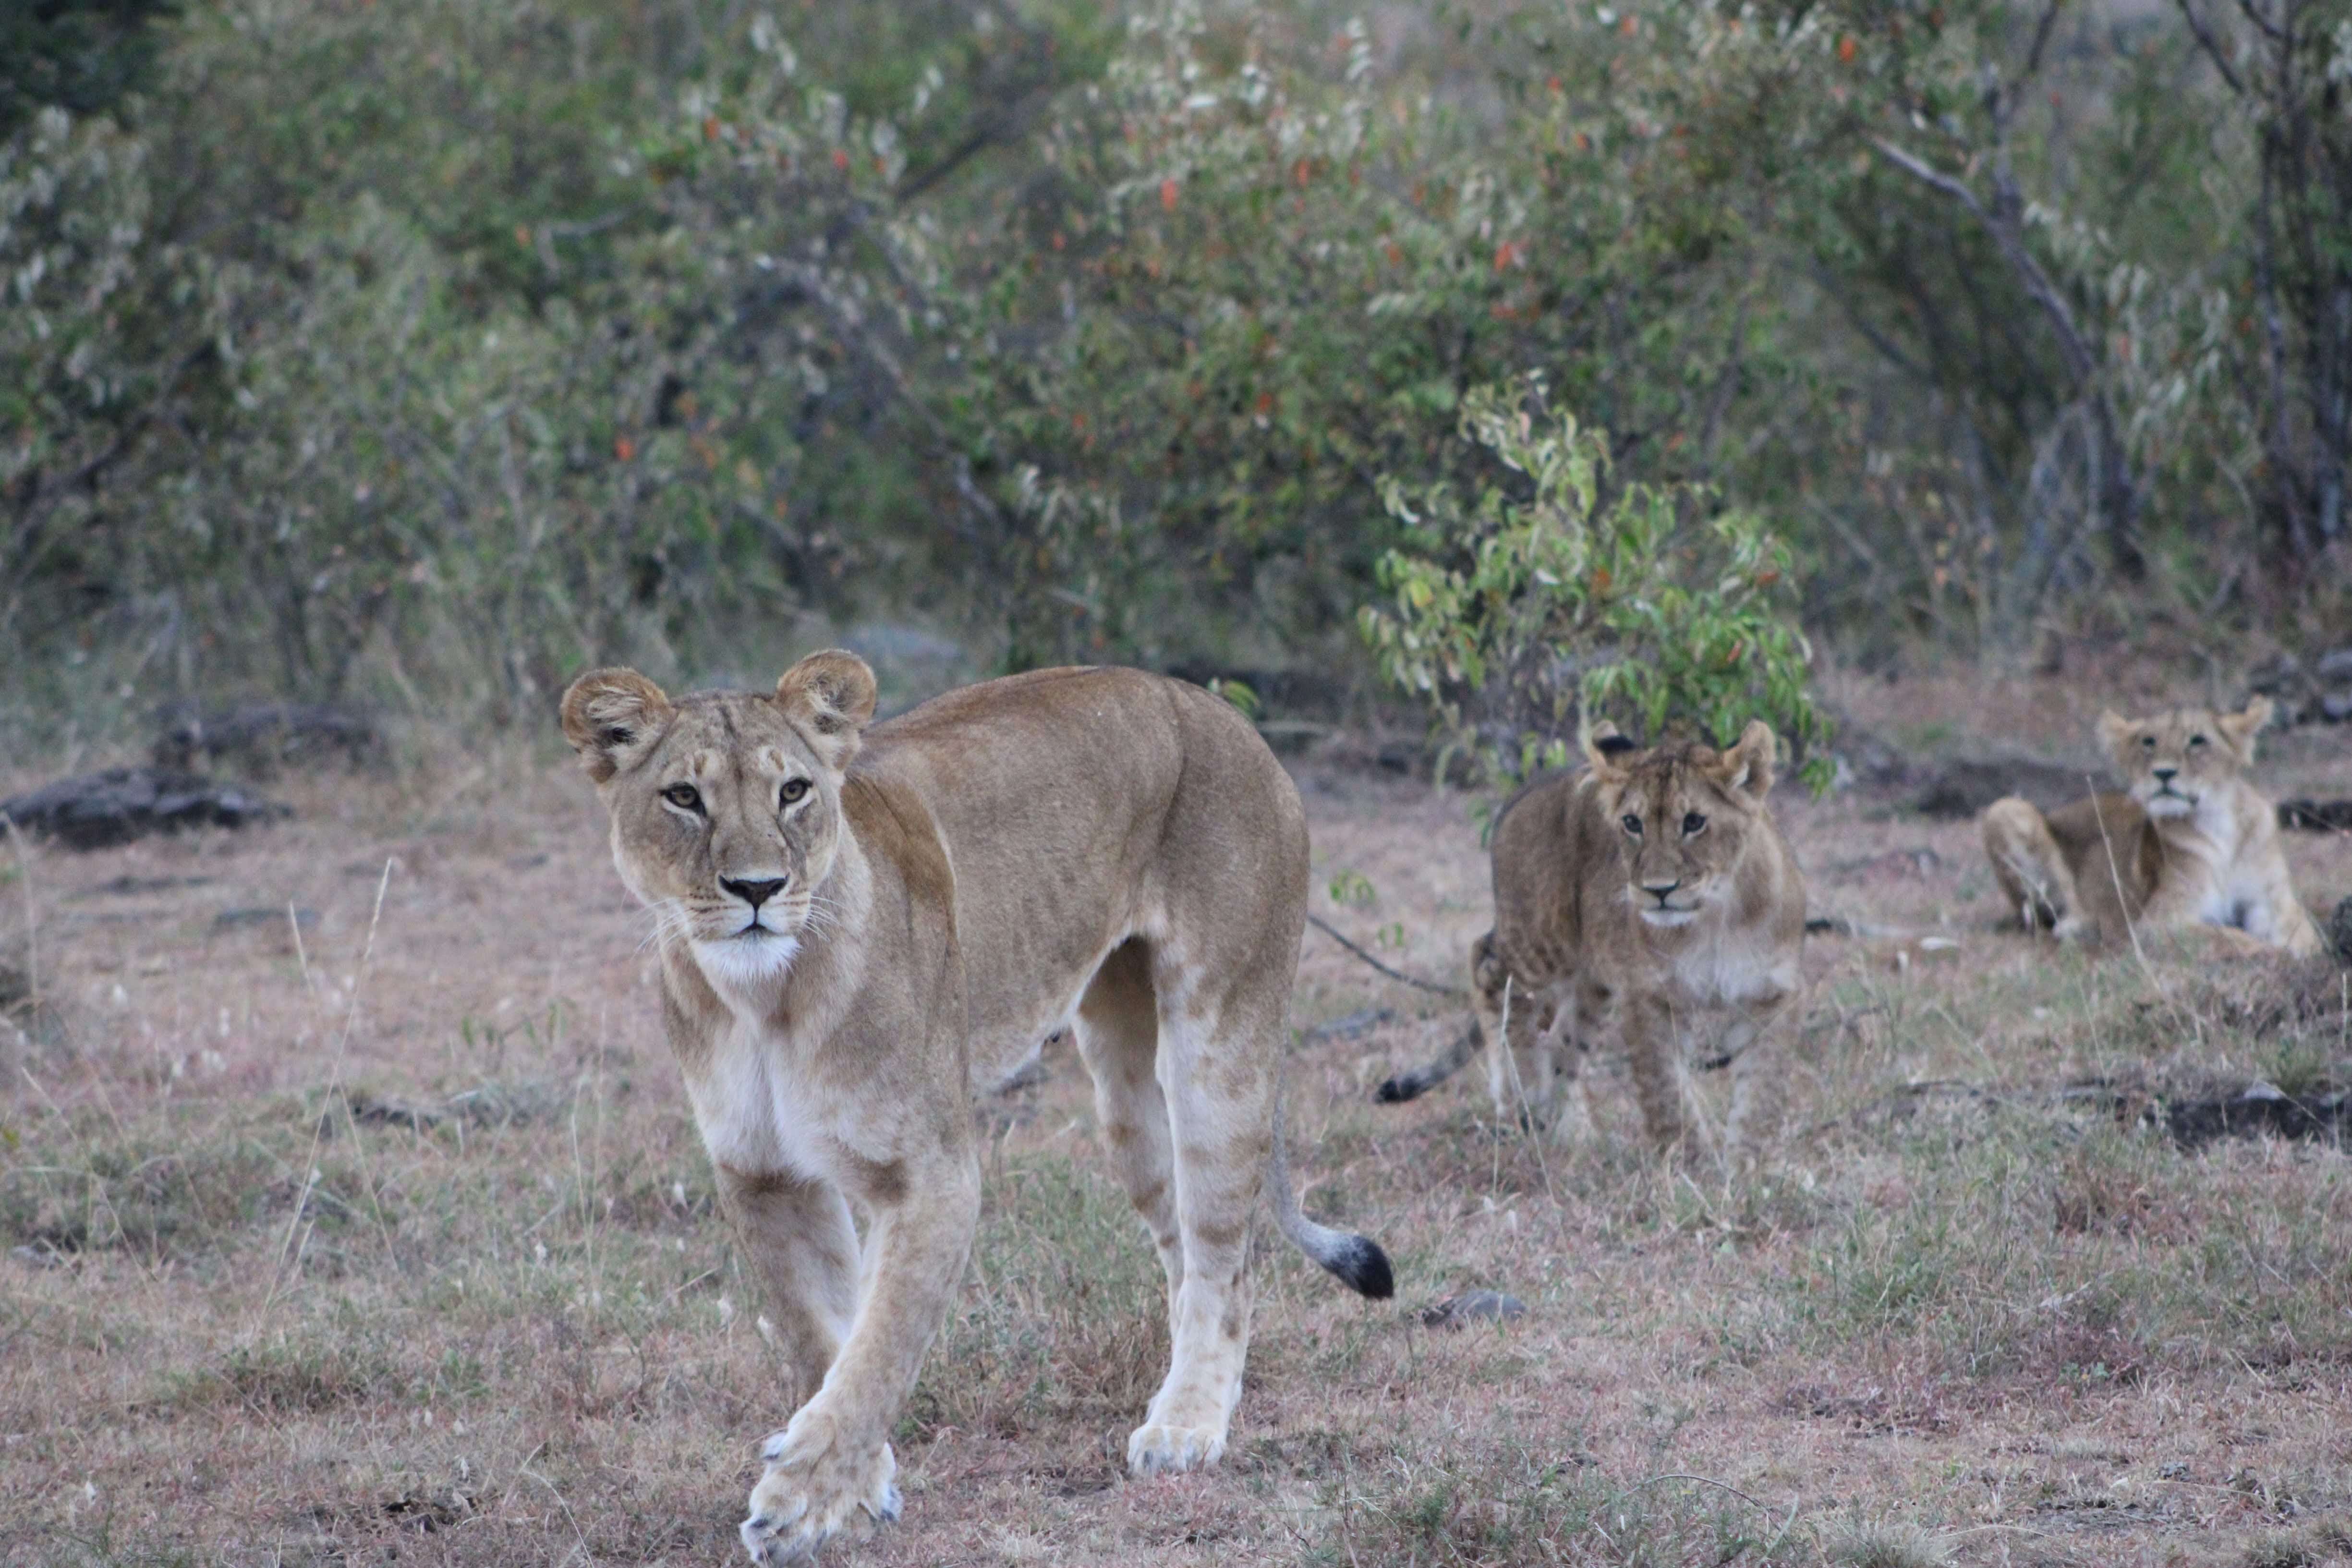 A pride of lions in the Masai Mara